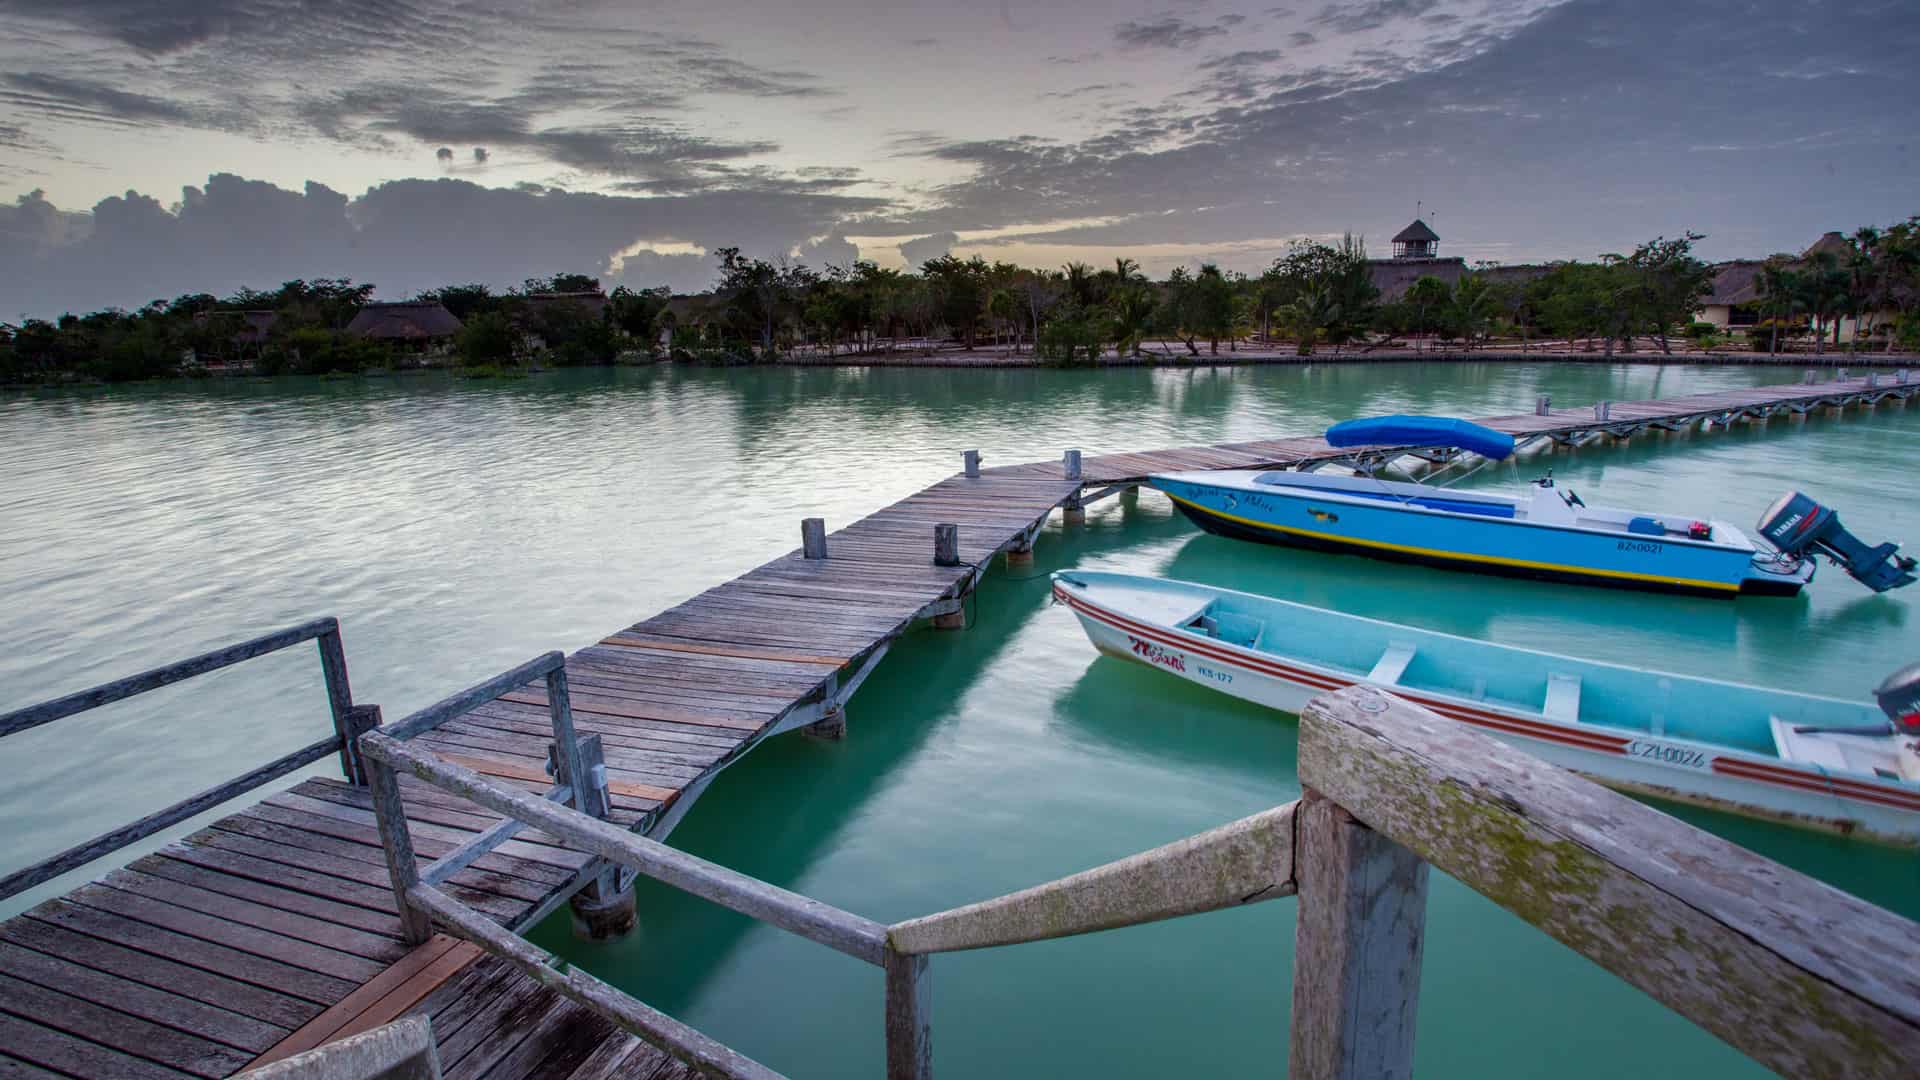 docks on the water in Belize